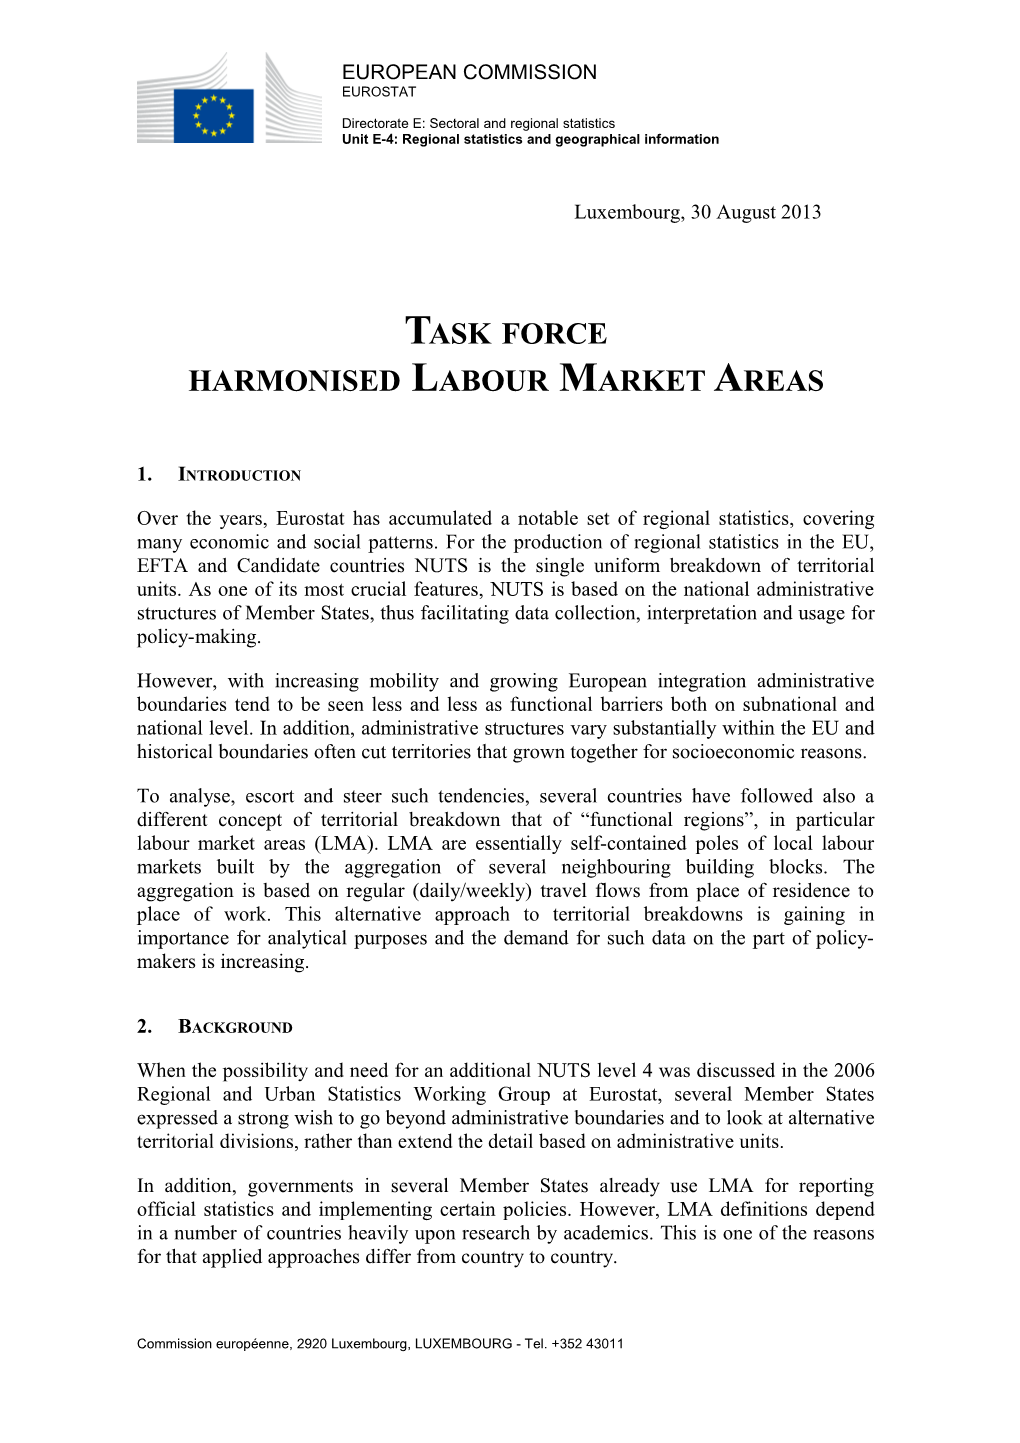 Harmonised Labour Market Areas